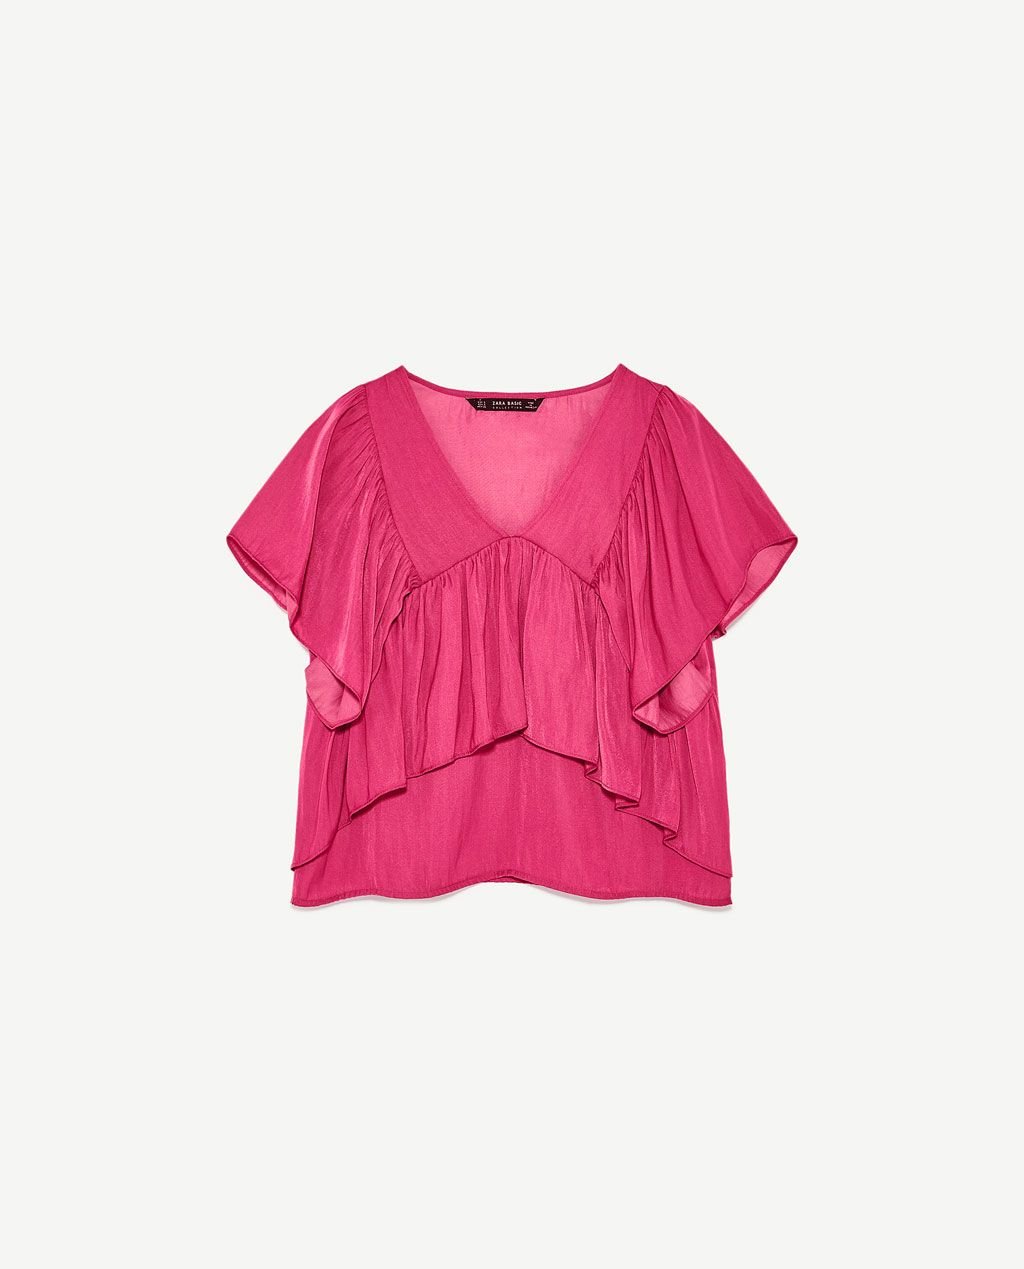 Zara Frilled Top in Pink.jpg